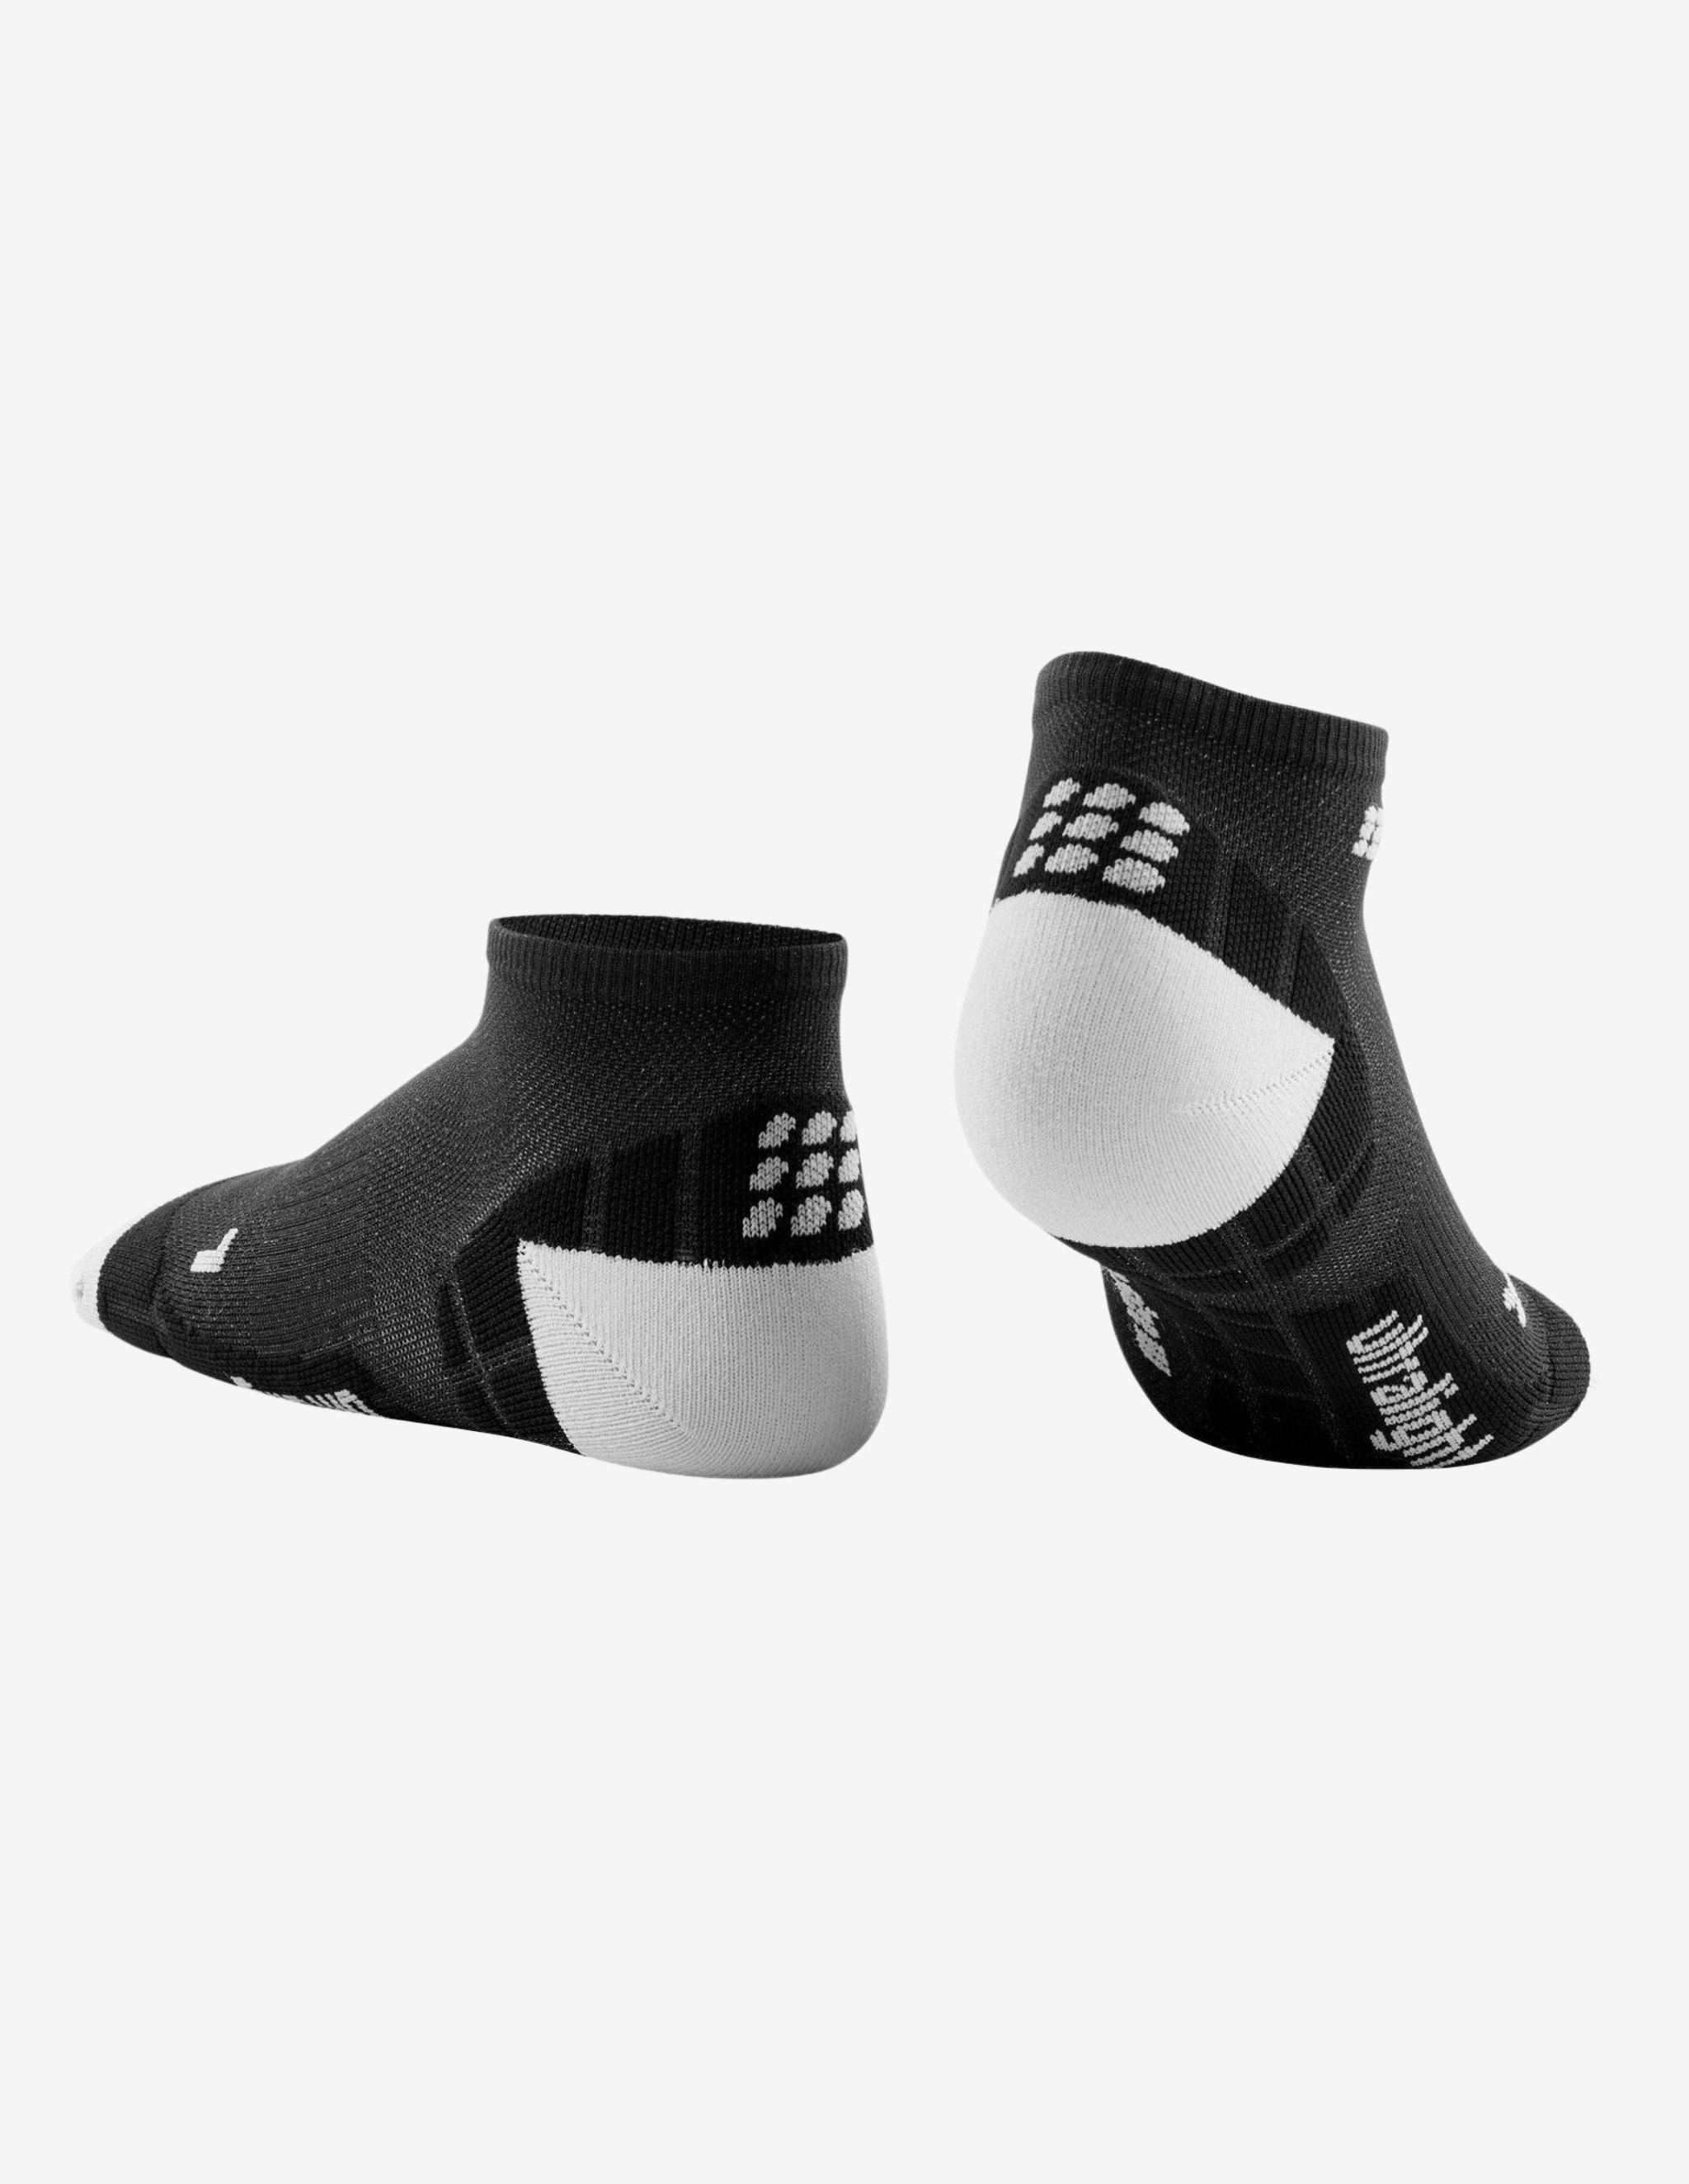 CEP Ultra Light V2 No Show Socks Black/Grey-Socks-CEP Compression-Guru Muscle